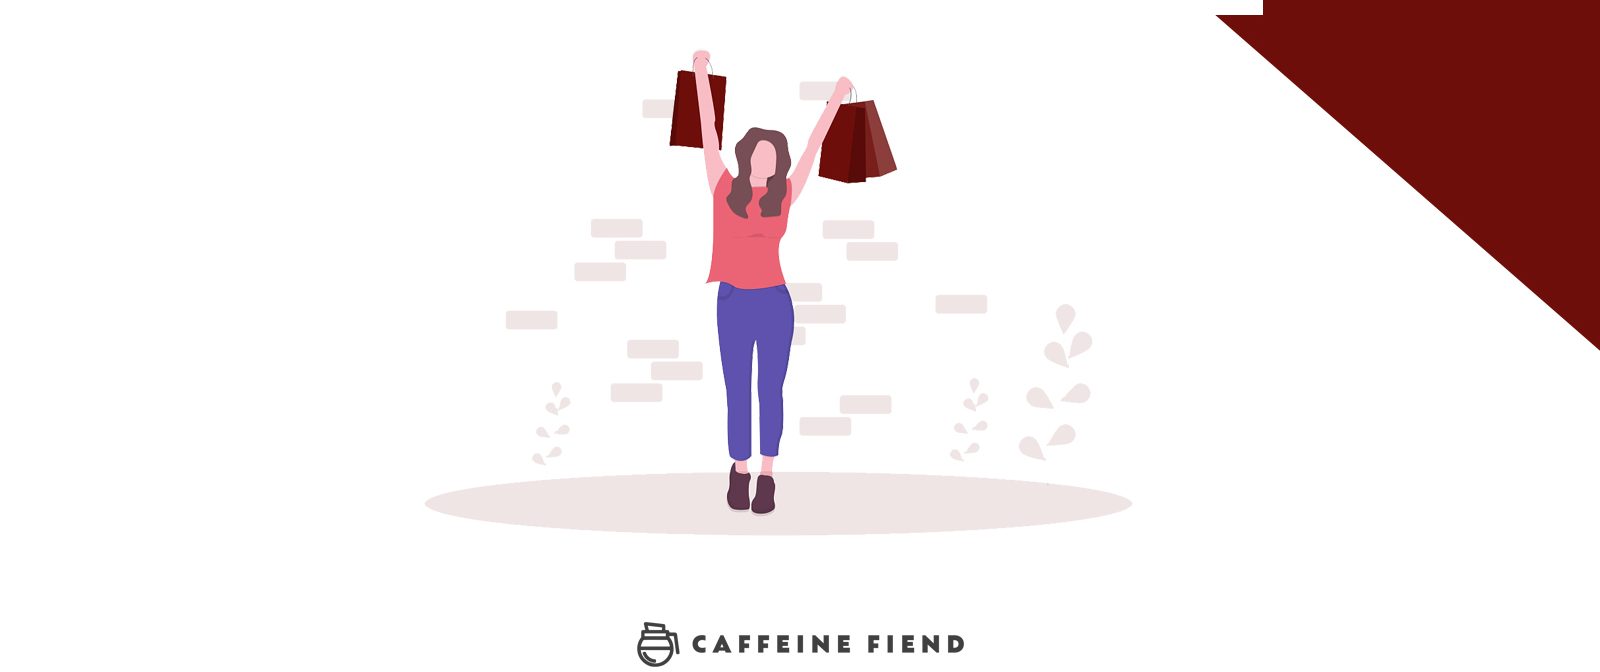 coffee black friday deals 2019 article on Caffeine Fiend